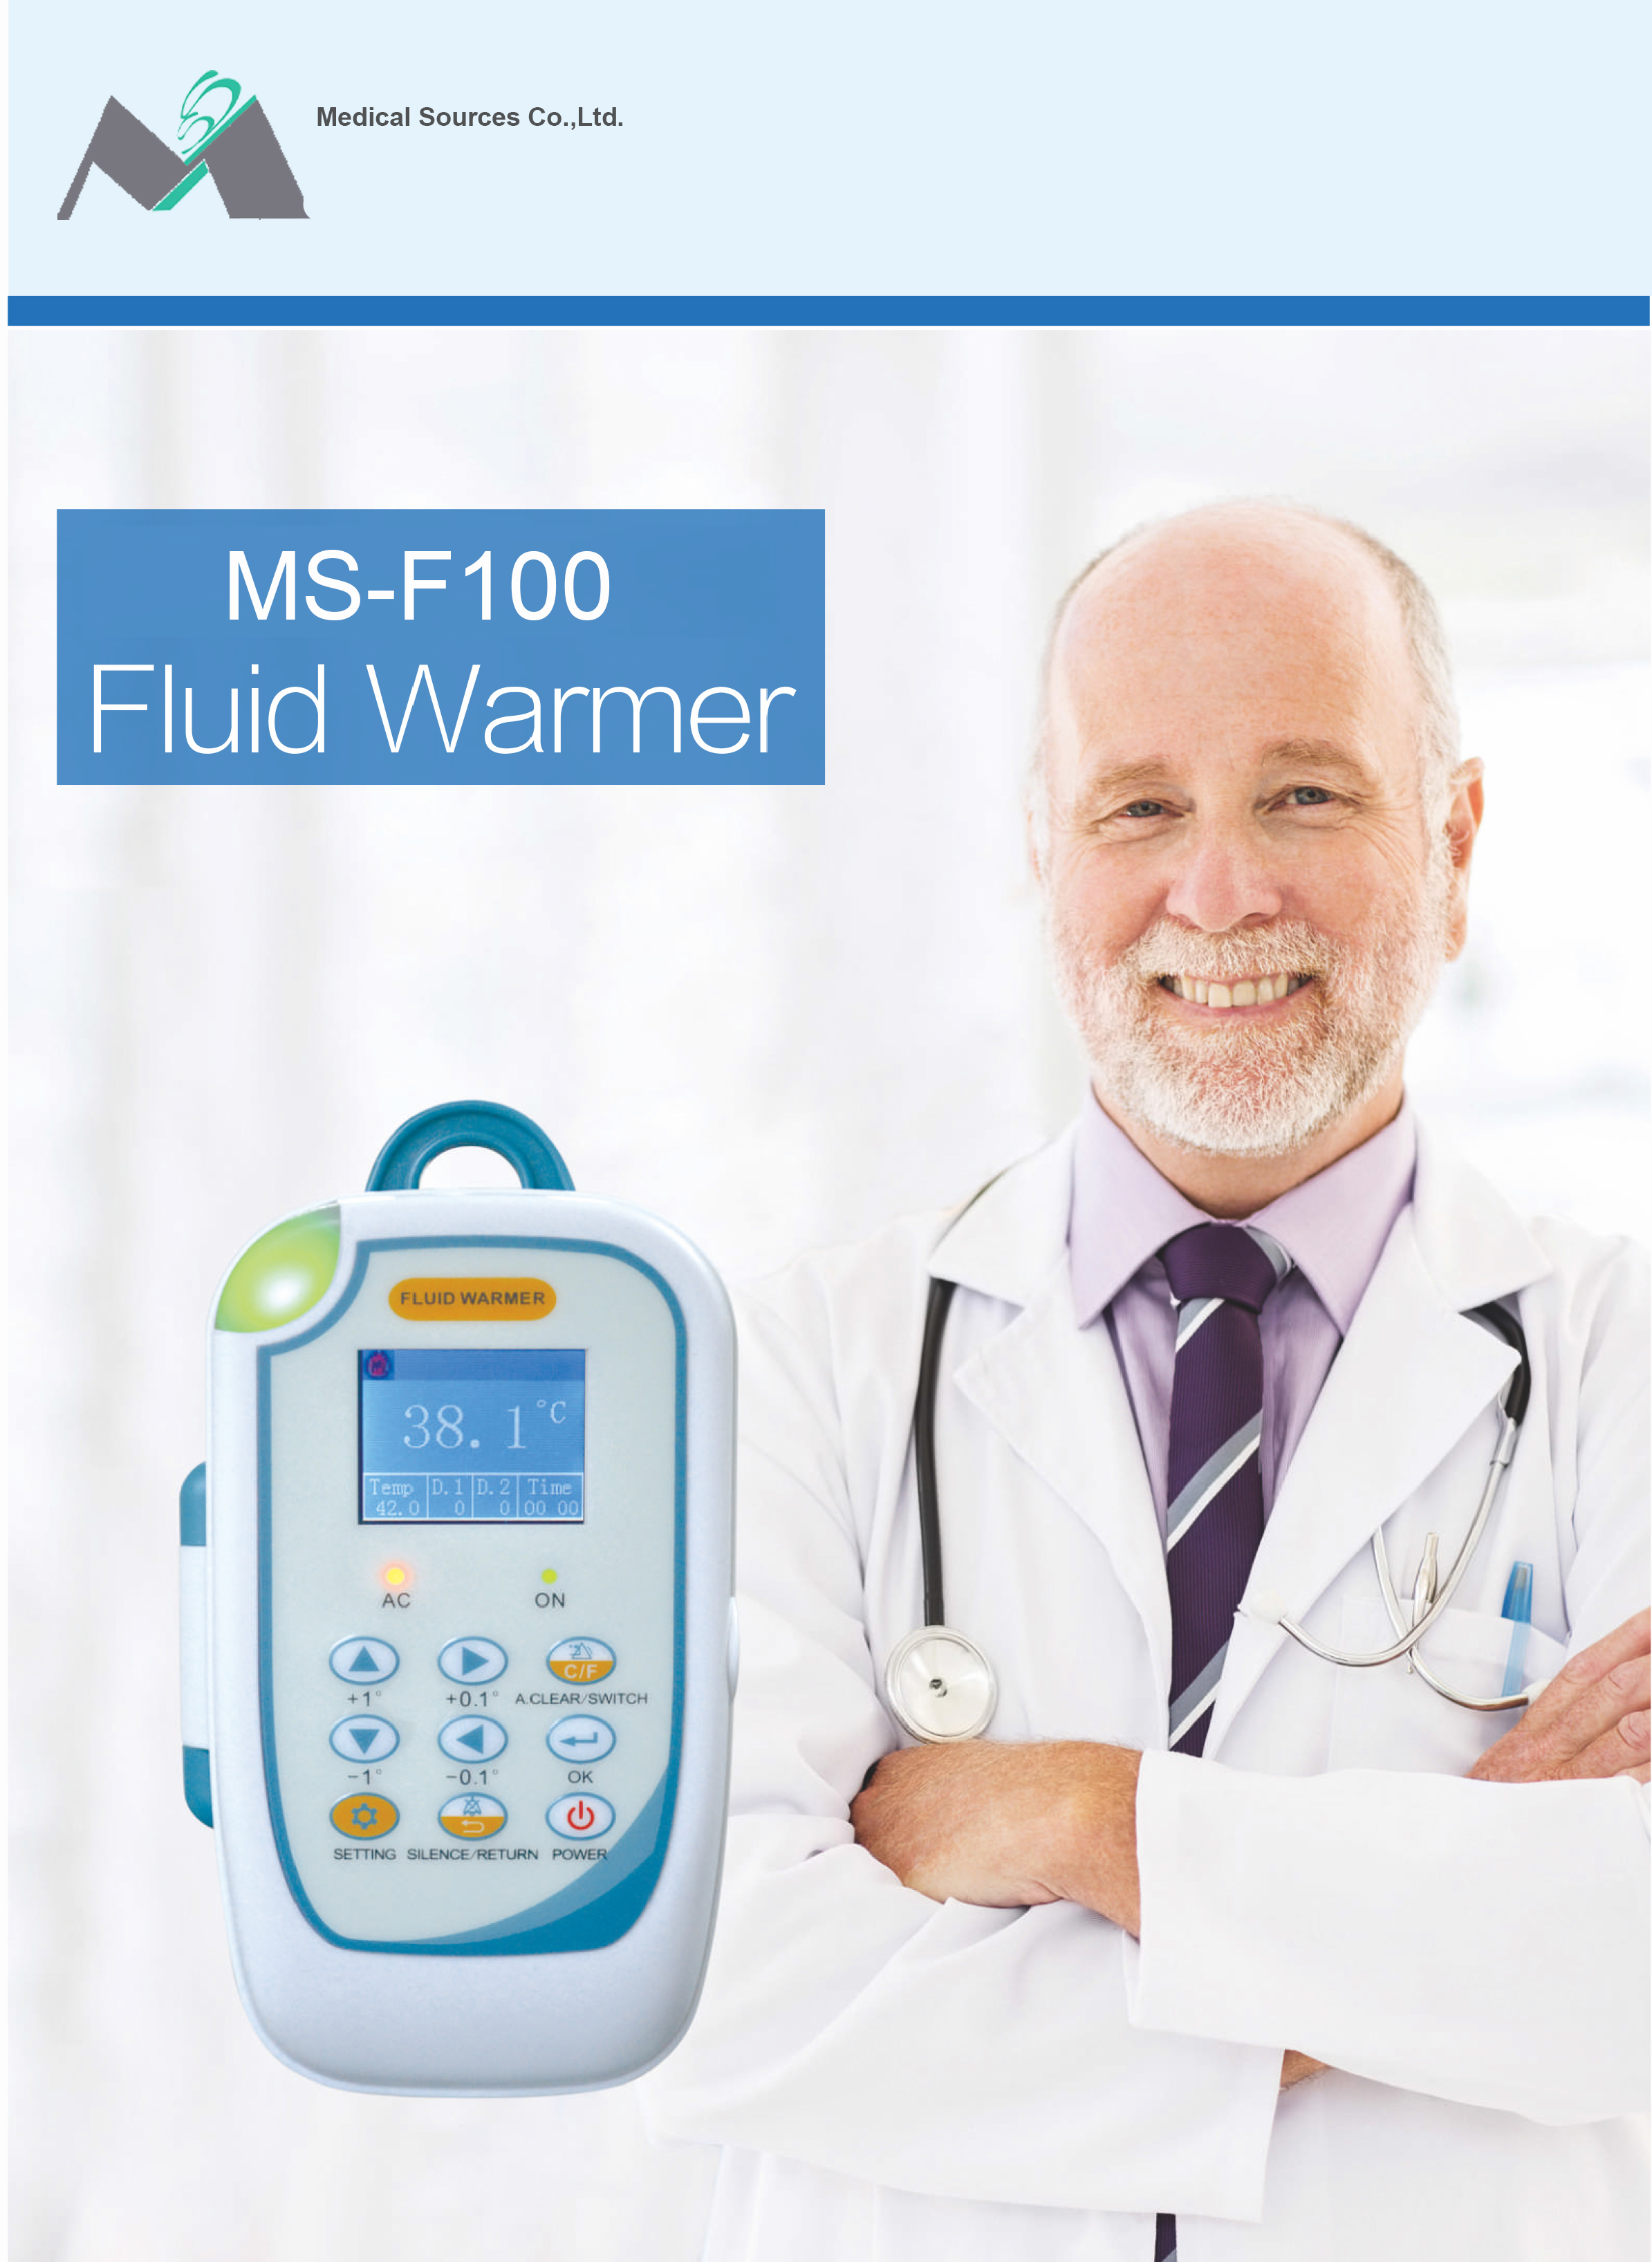 MS-F100 Fluid Warmer